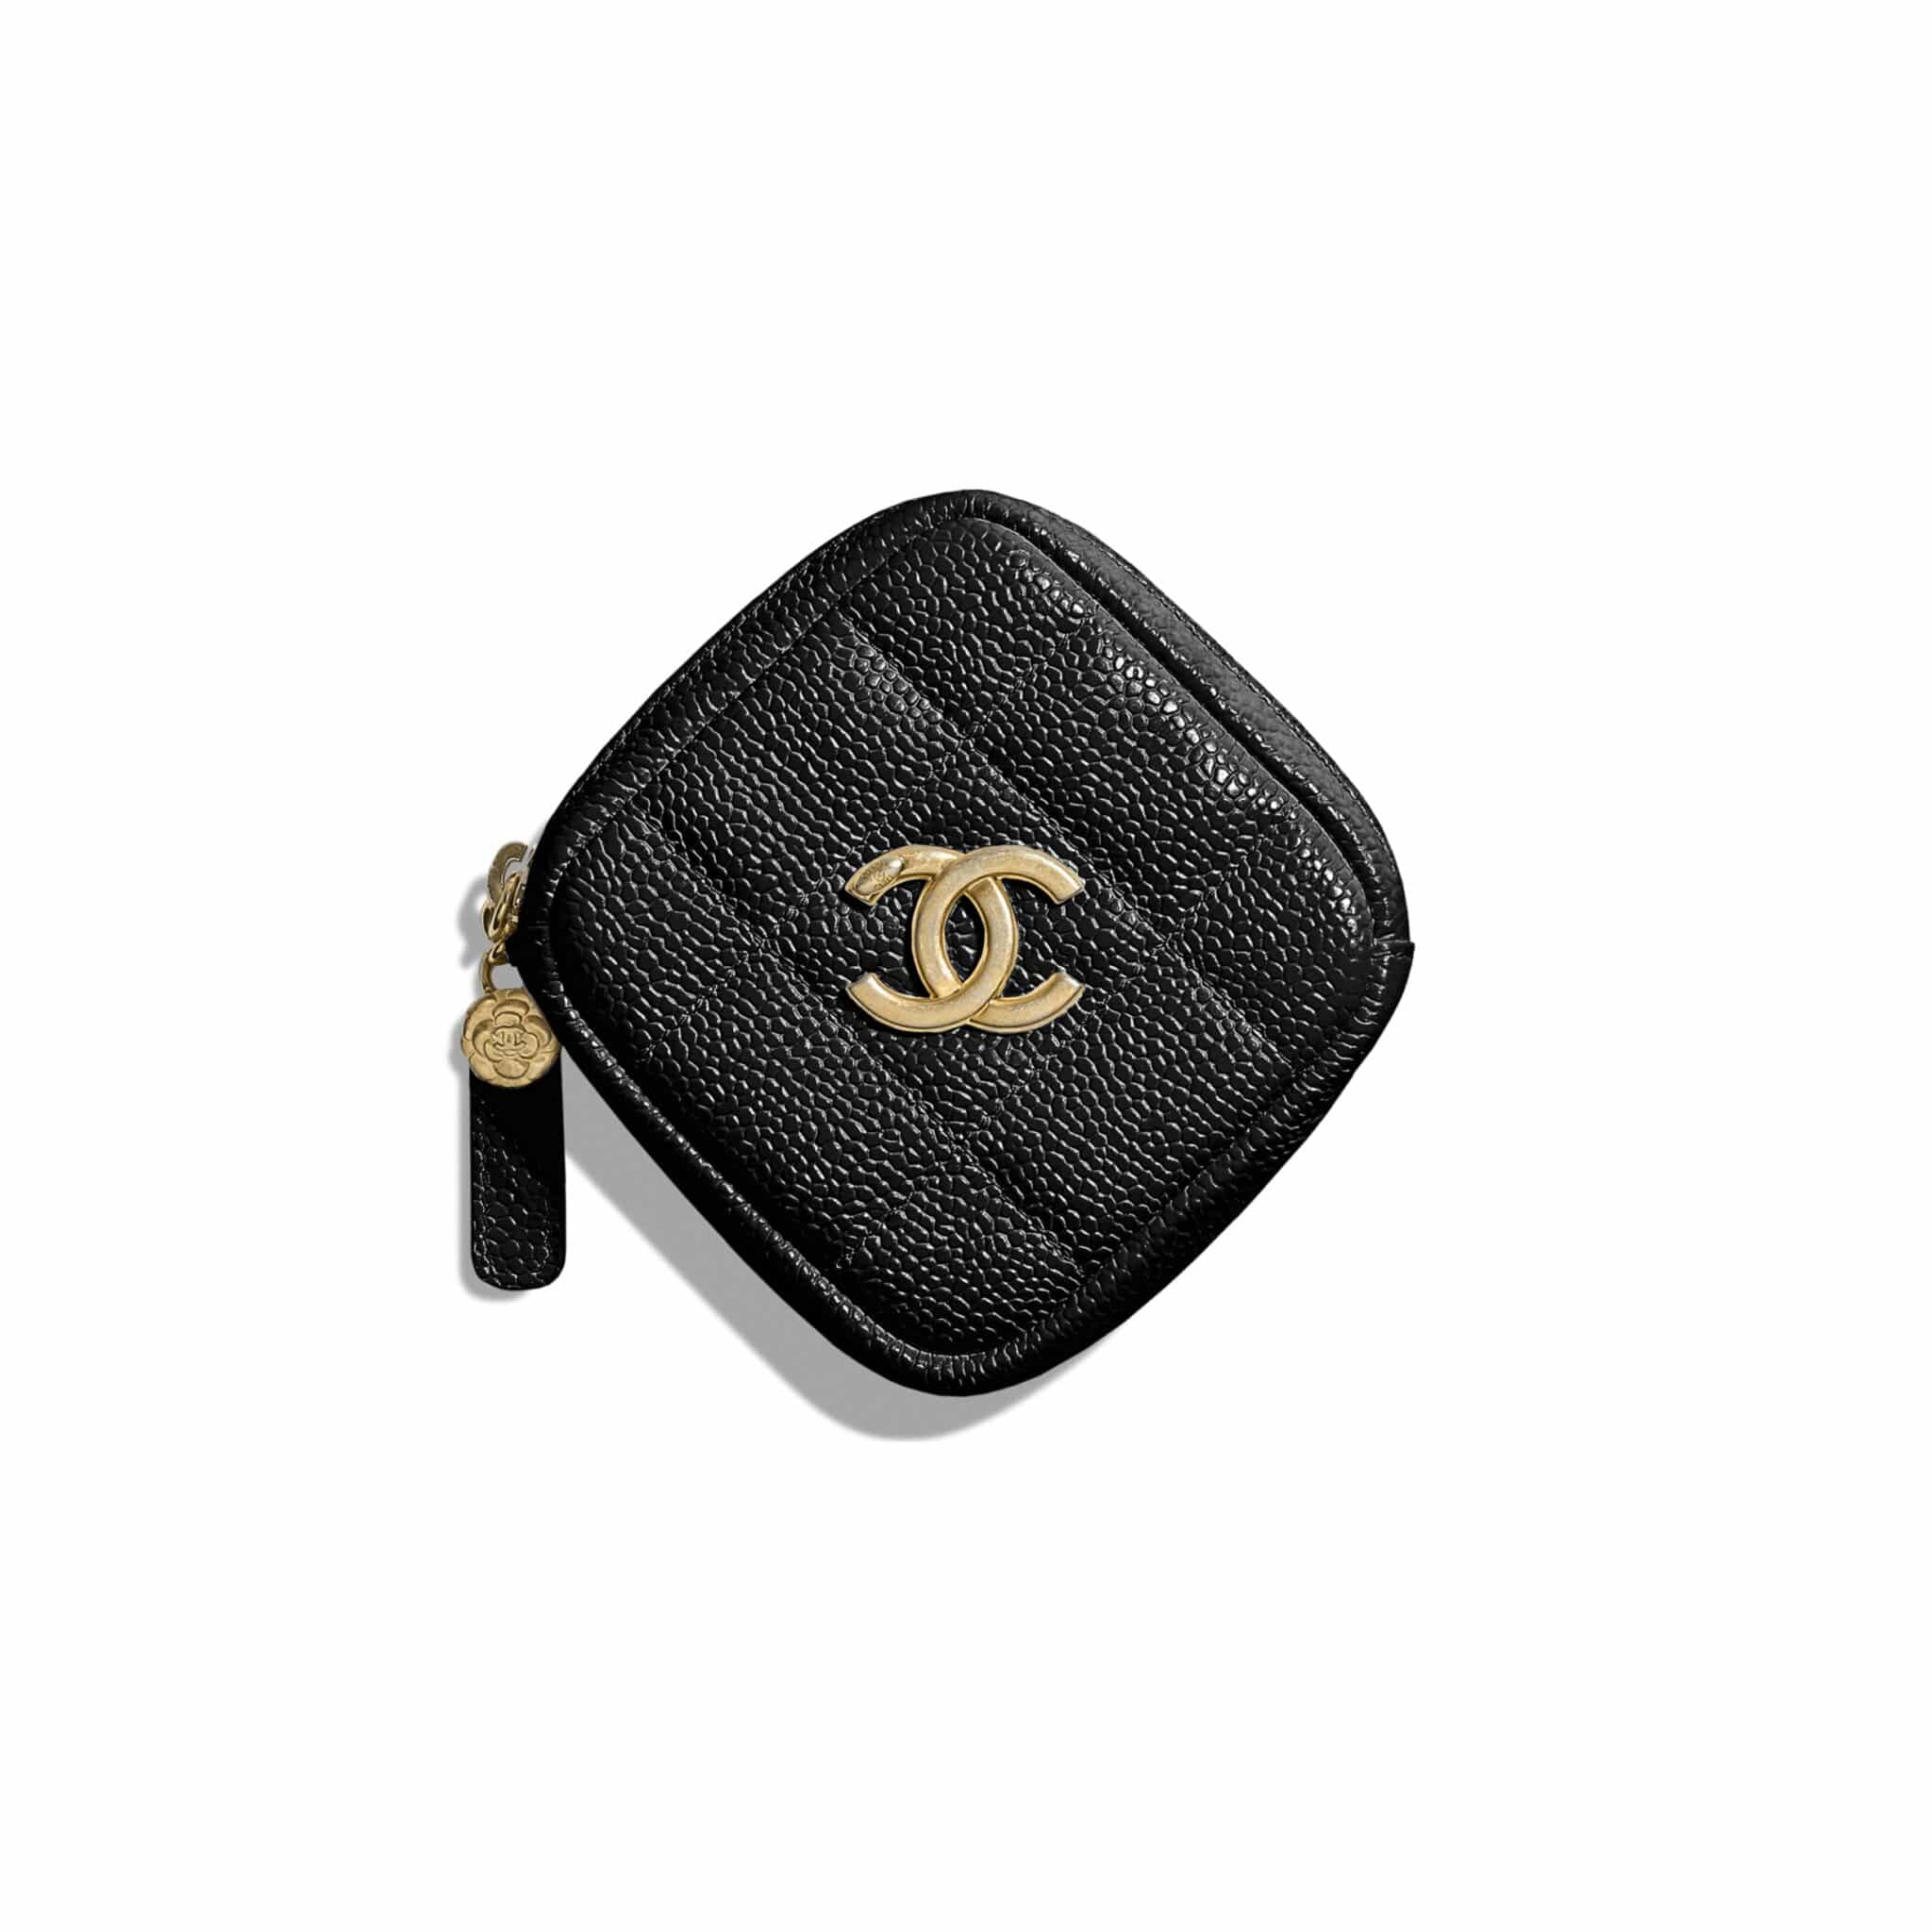 21 Best Chanel coin purse ideas  chanel coin purse, chanel, coin